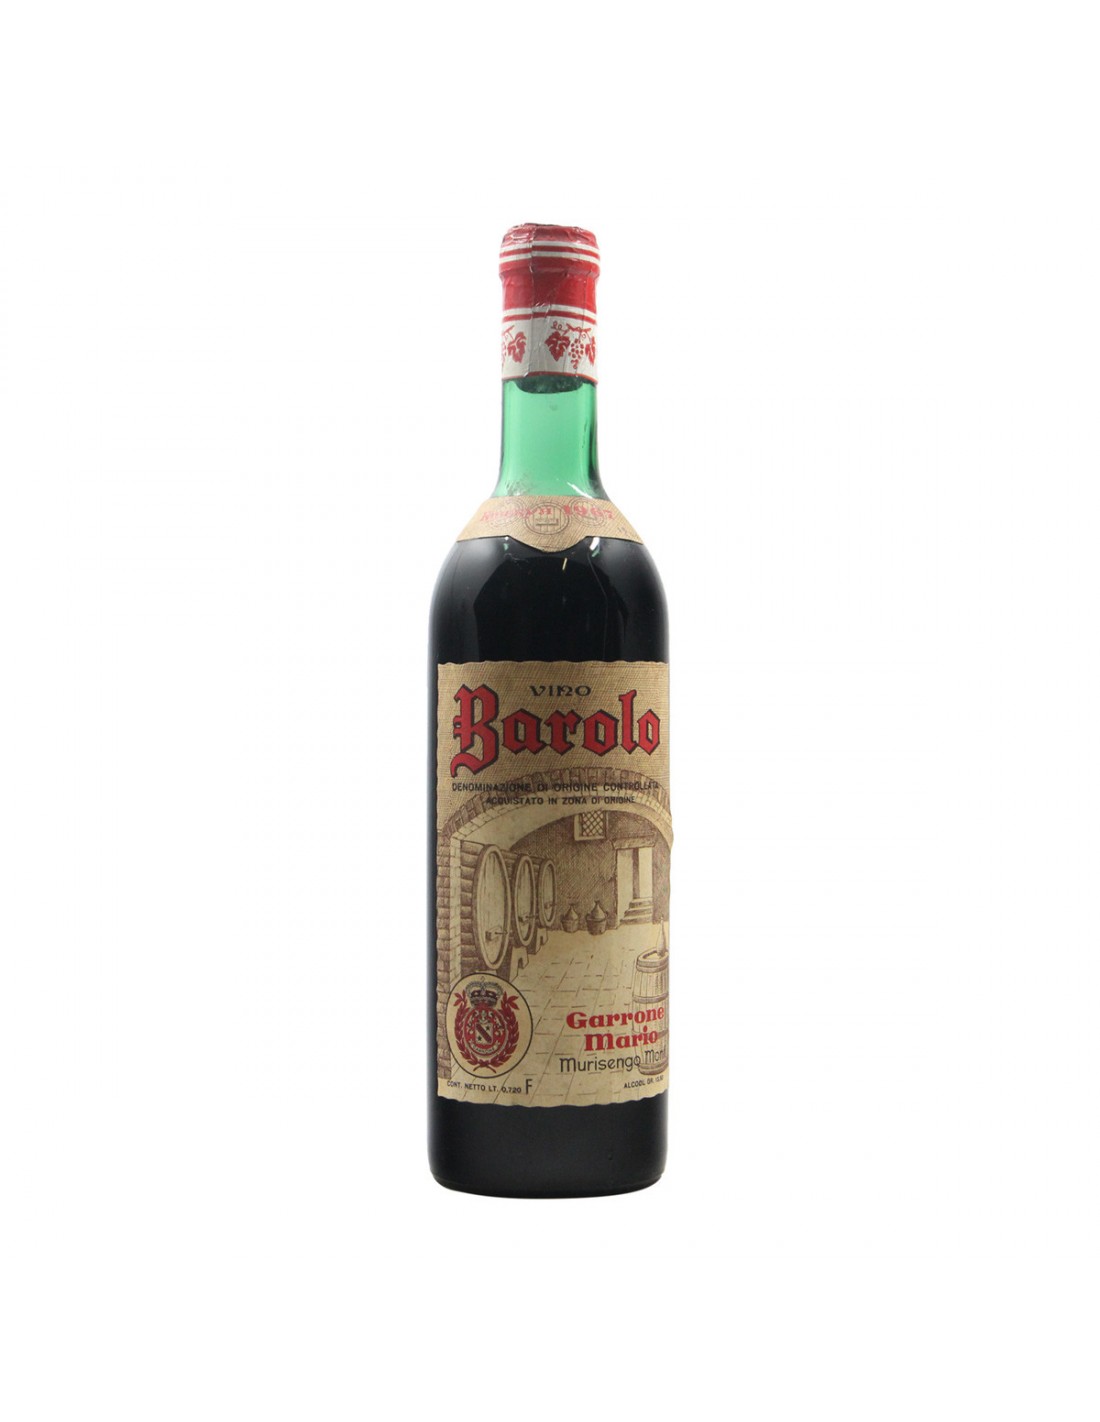 BAROLO RISERVA 1967 GARRONE MARIO Grandi Bottiglie